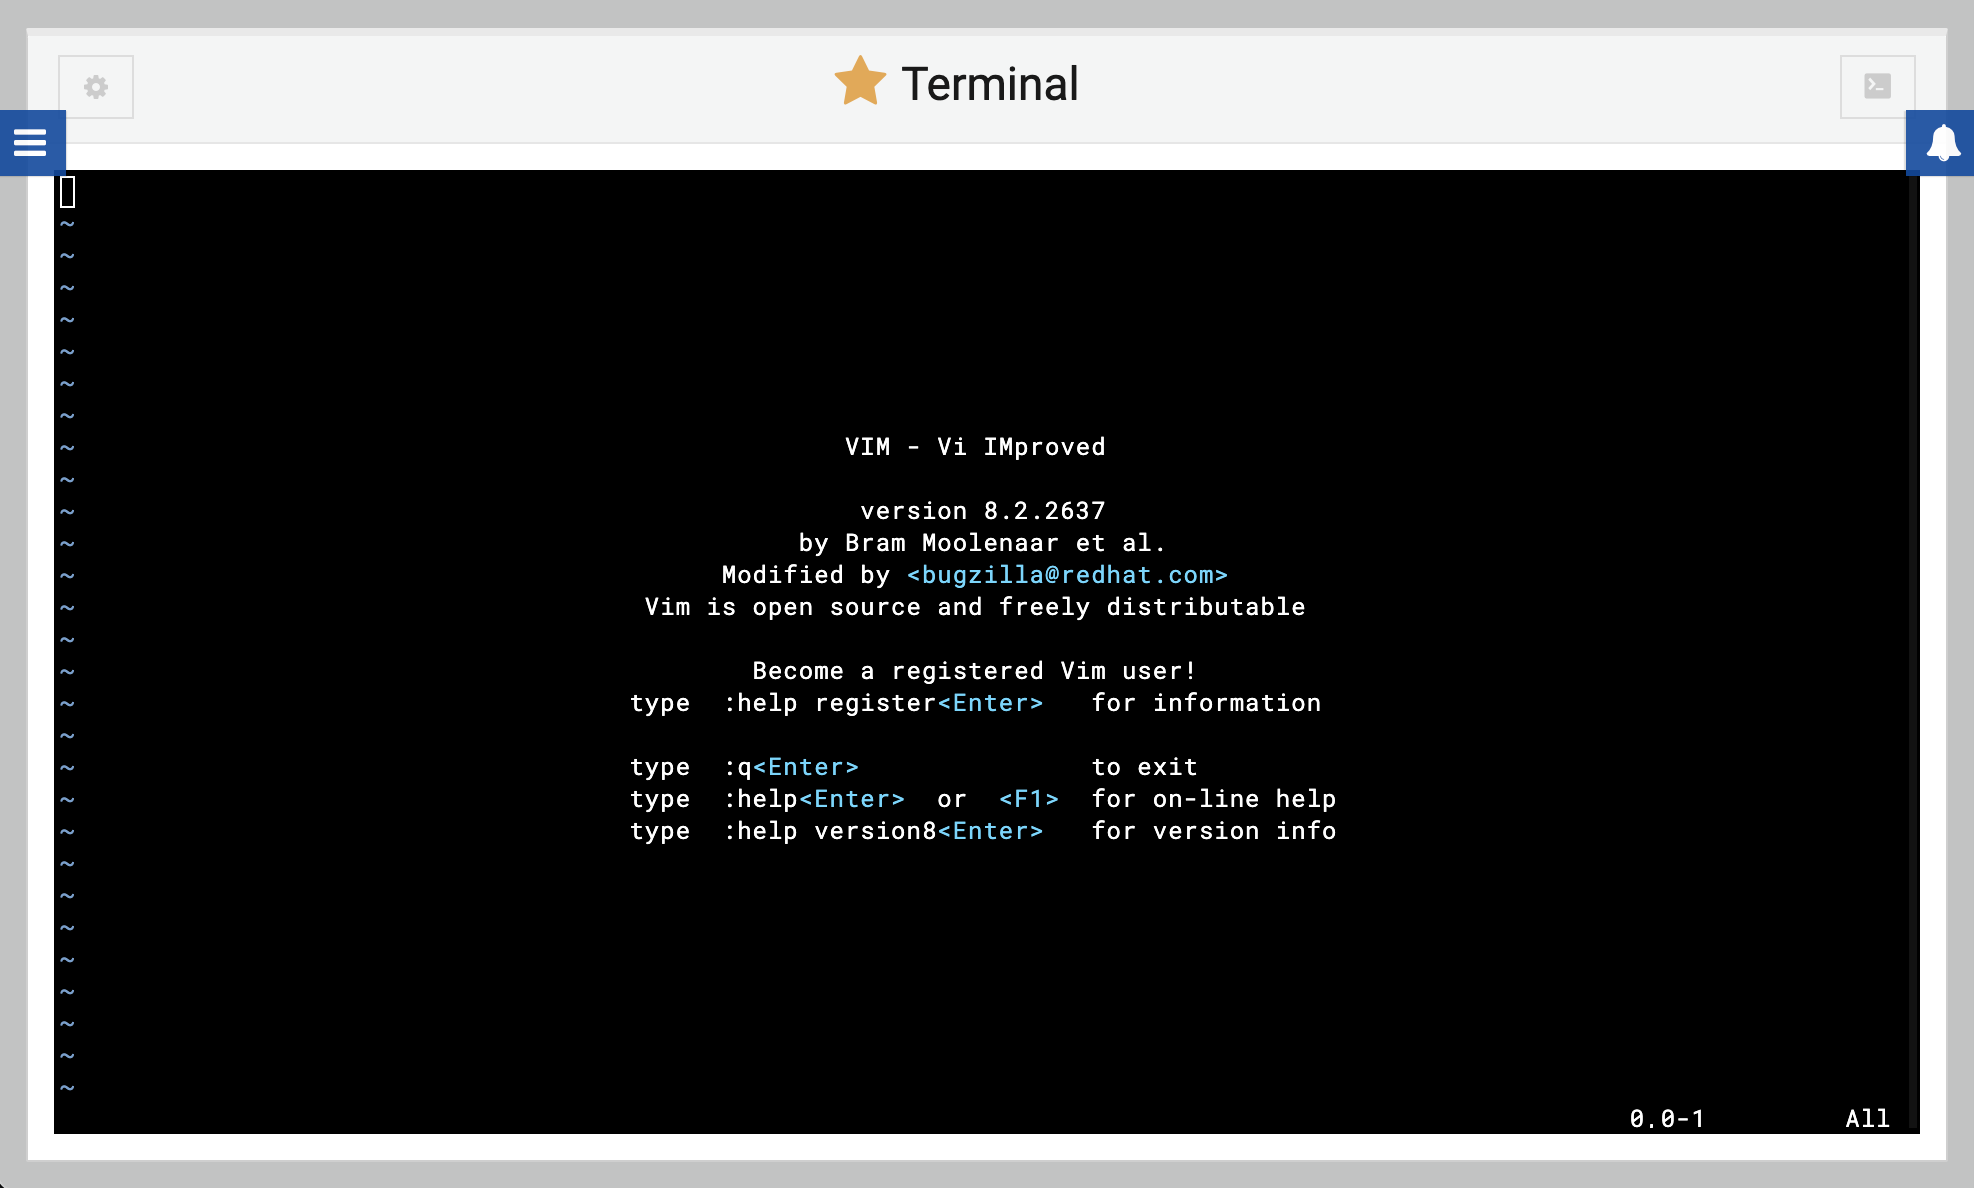 A new Webmin Terminal module